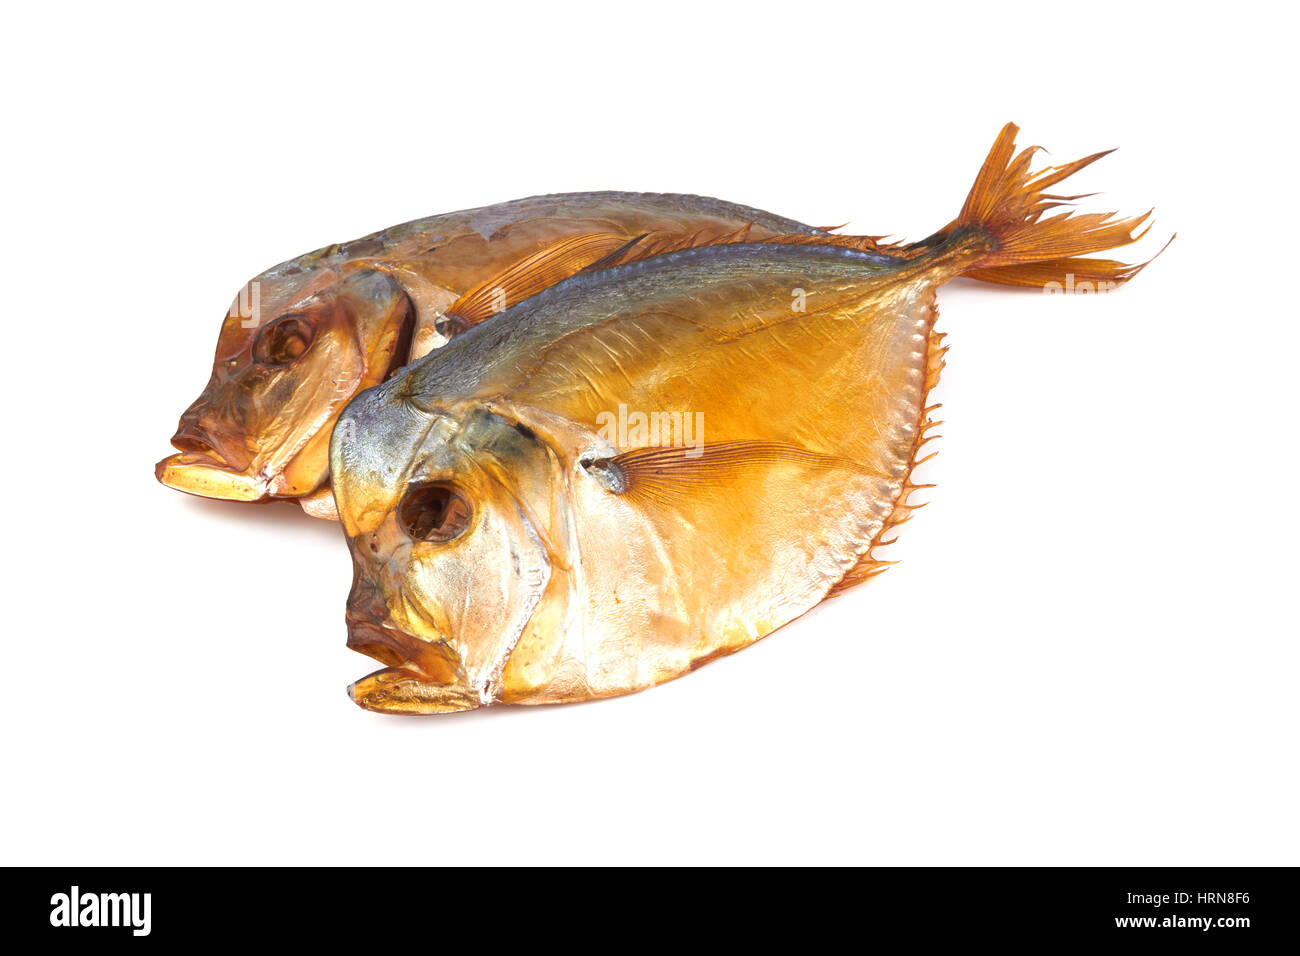 Fumato moonfish isolato su uno sfondo bianco Foto Stock